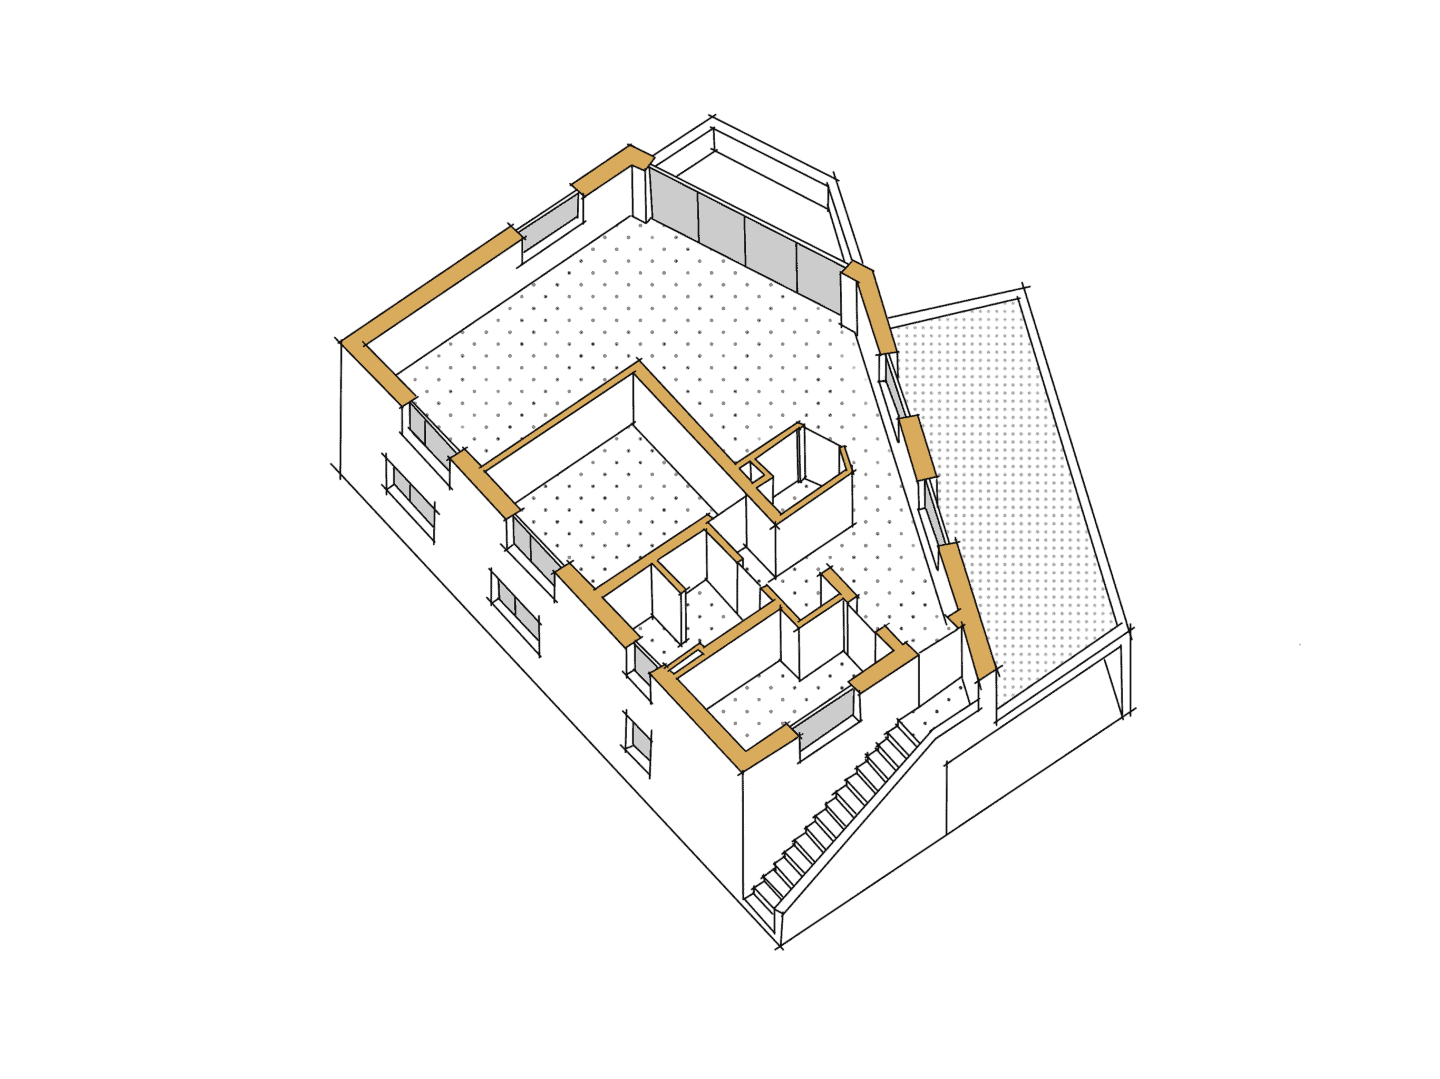 Visueller 3D Grundriss des Obergeschosses eines Hauses